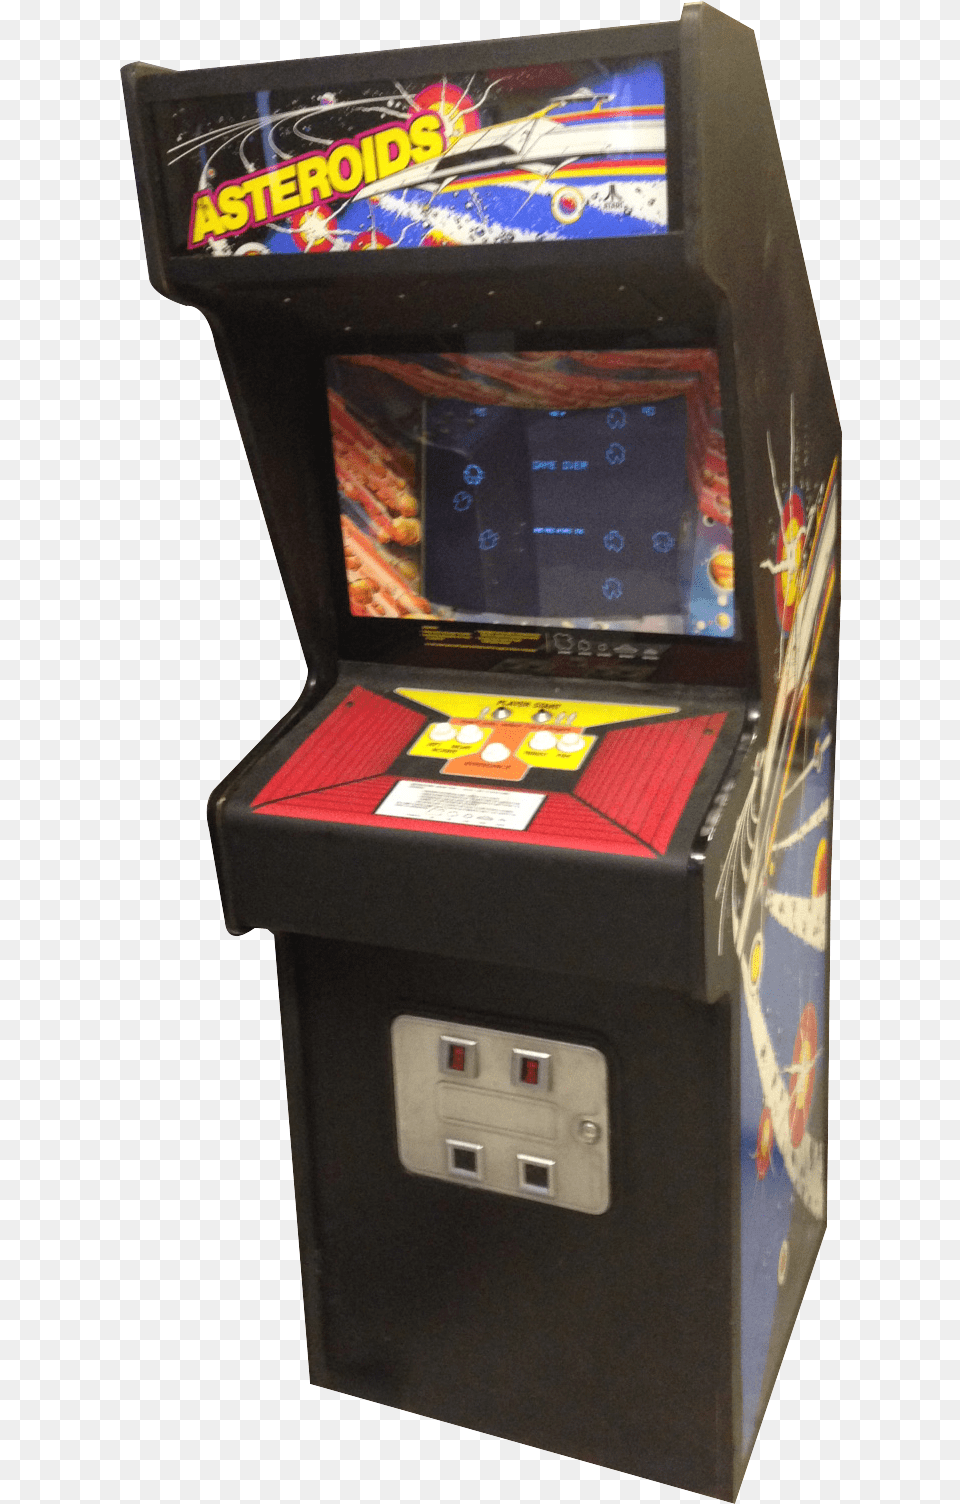 Asteroids Arcade Machine For Hire Asteroids Arcade Machine, Arcade Game Machine, Game Png